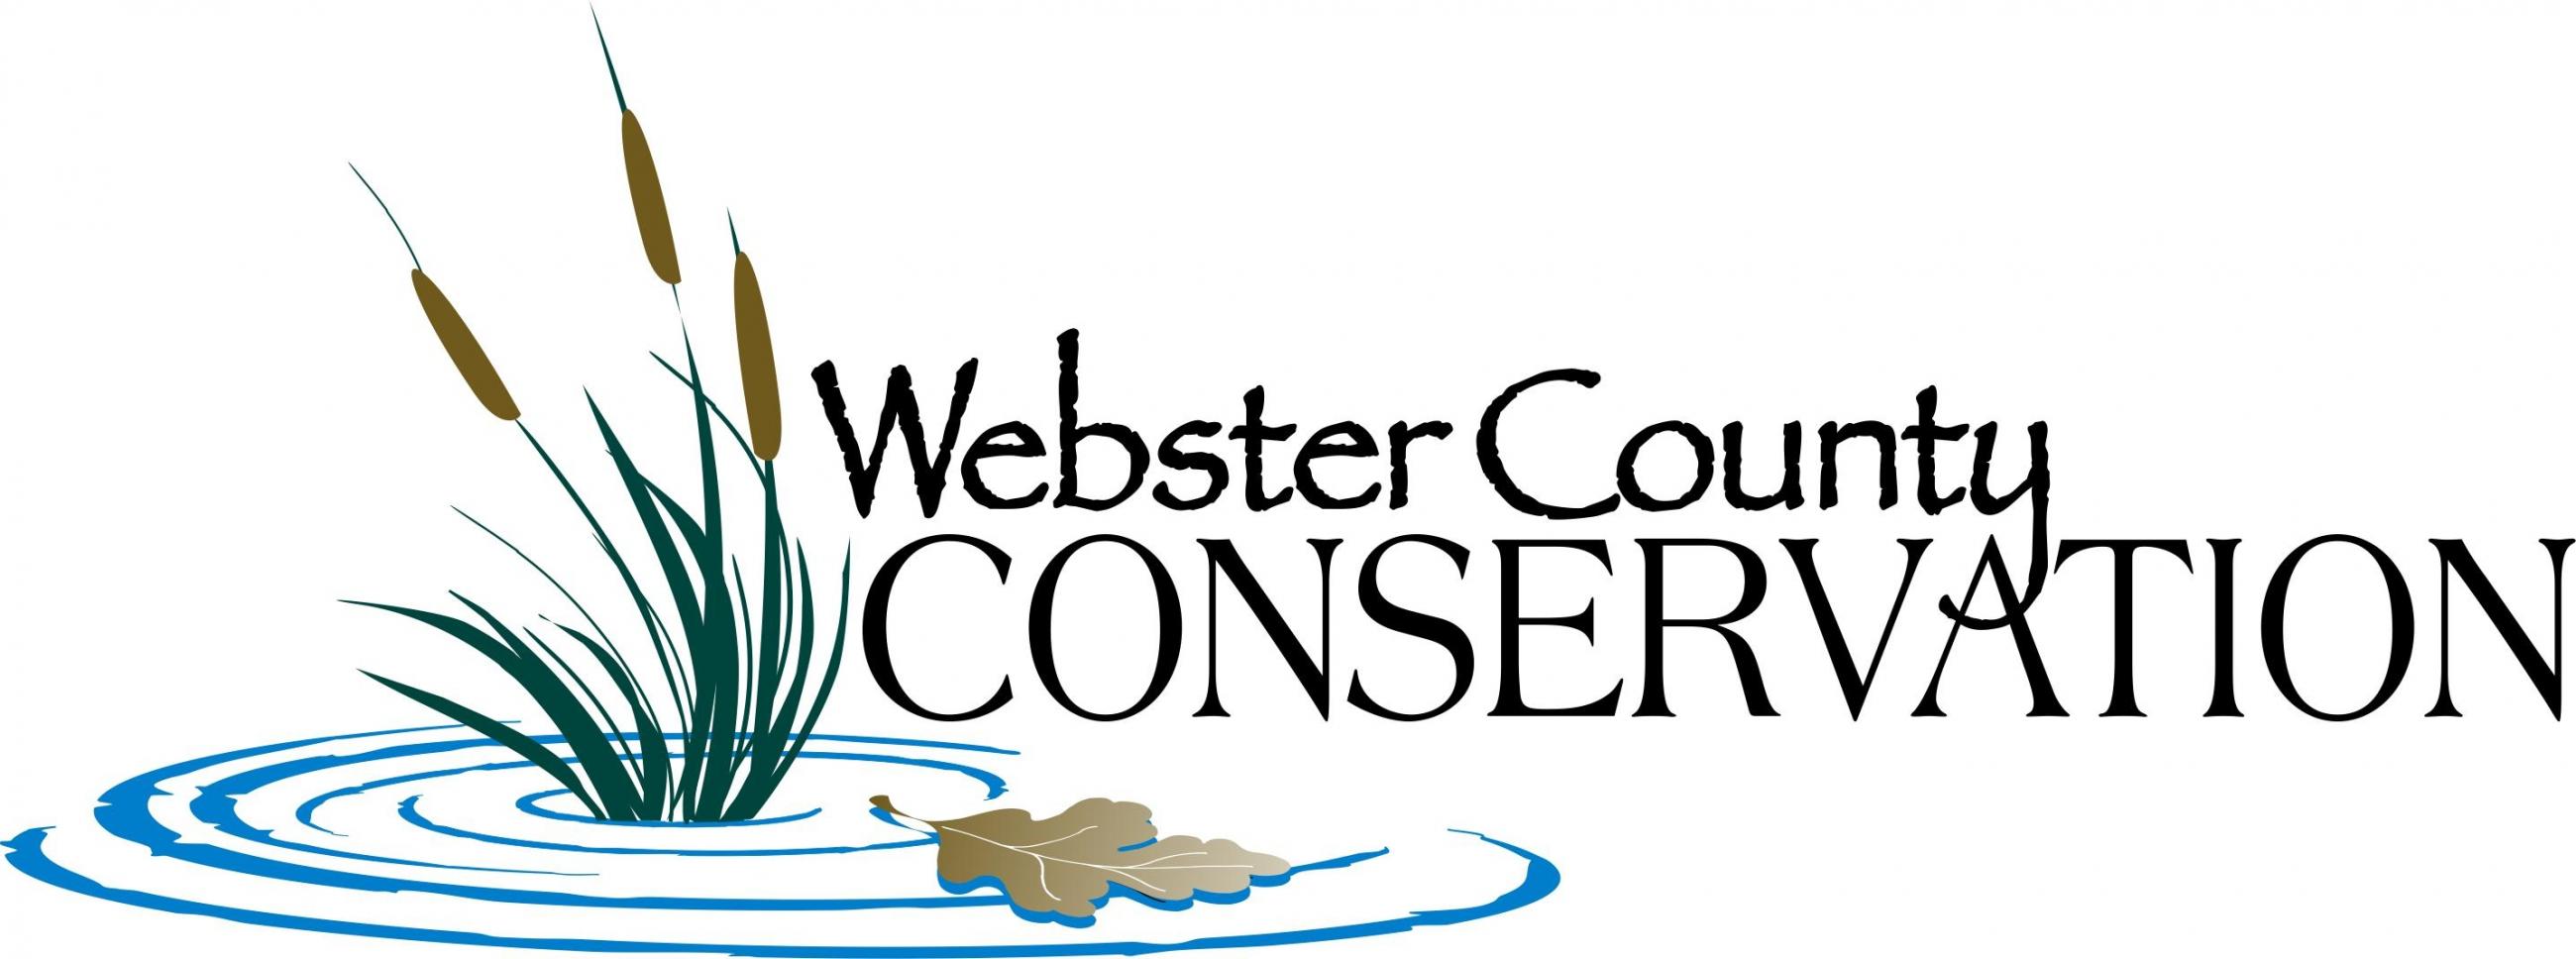 Webster County Conservation's Image